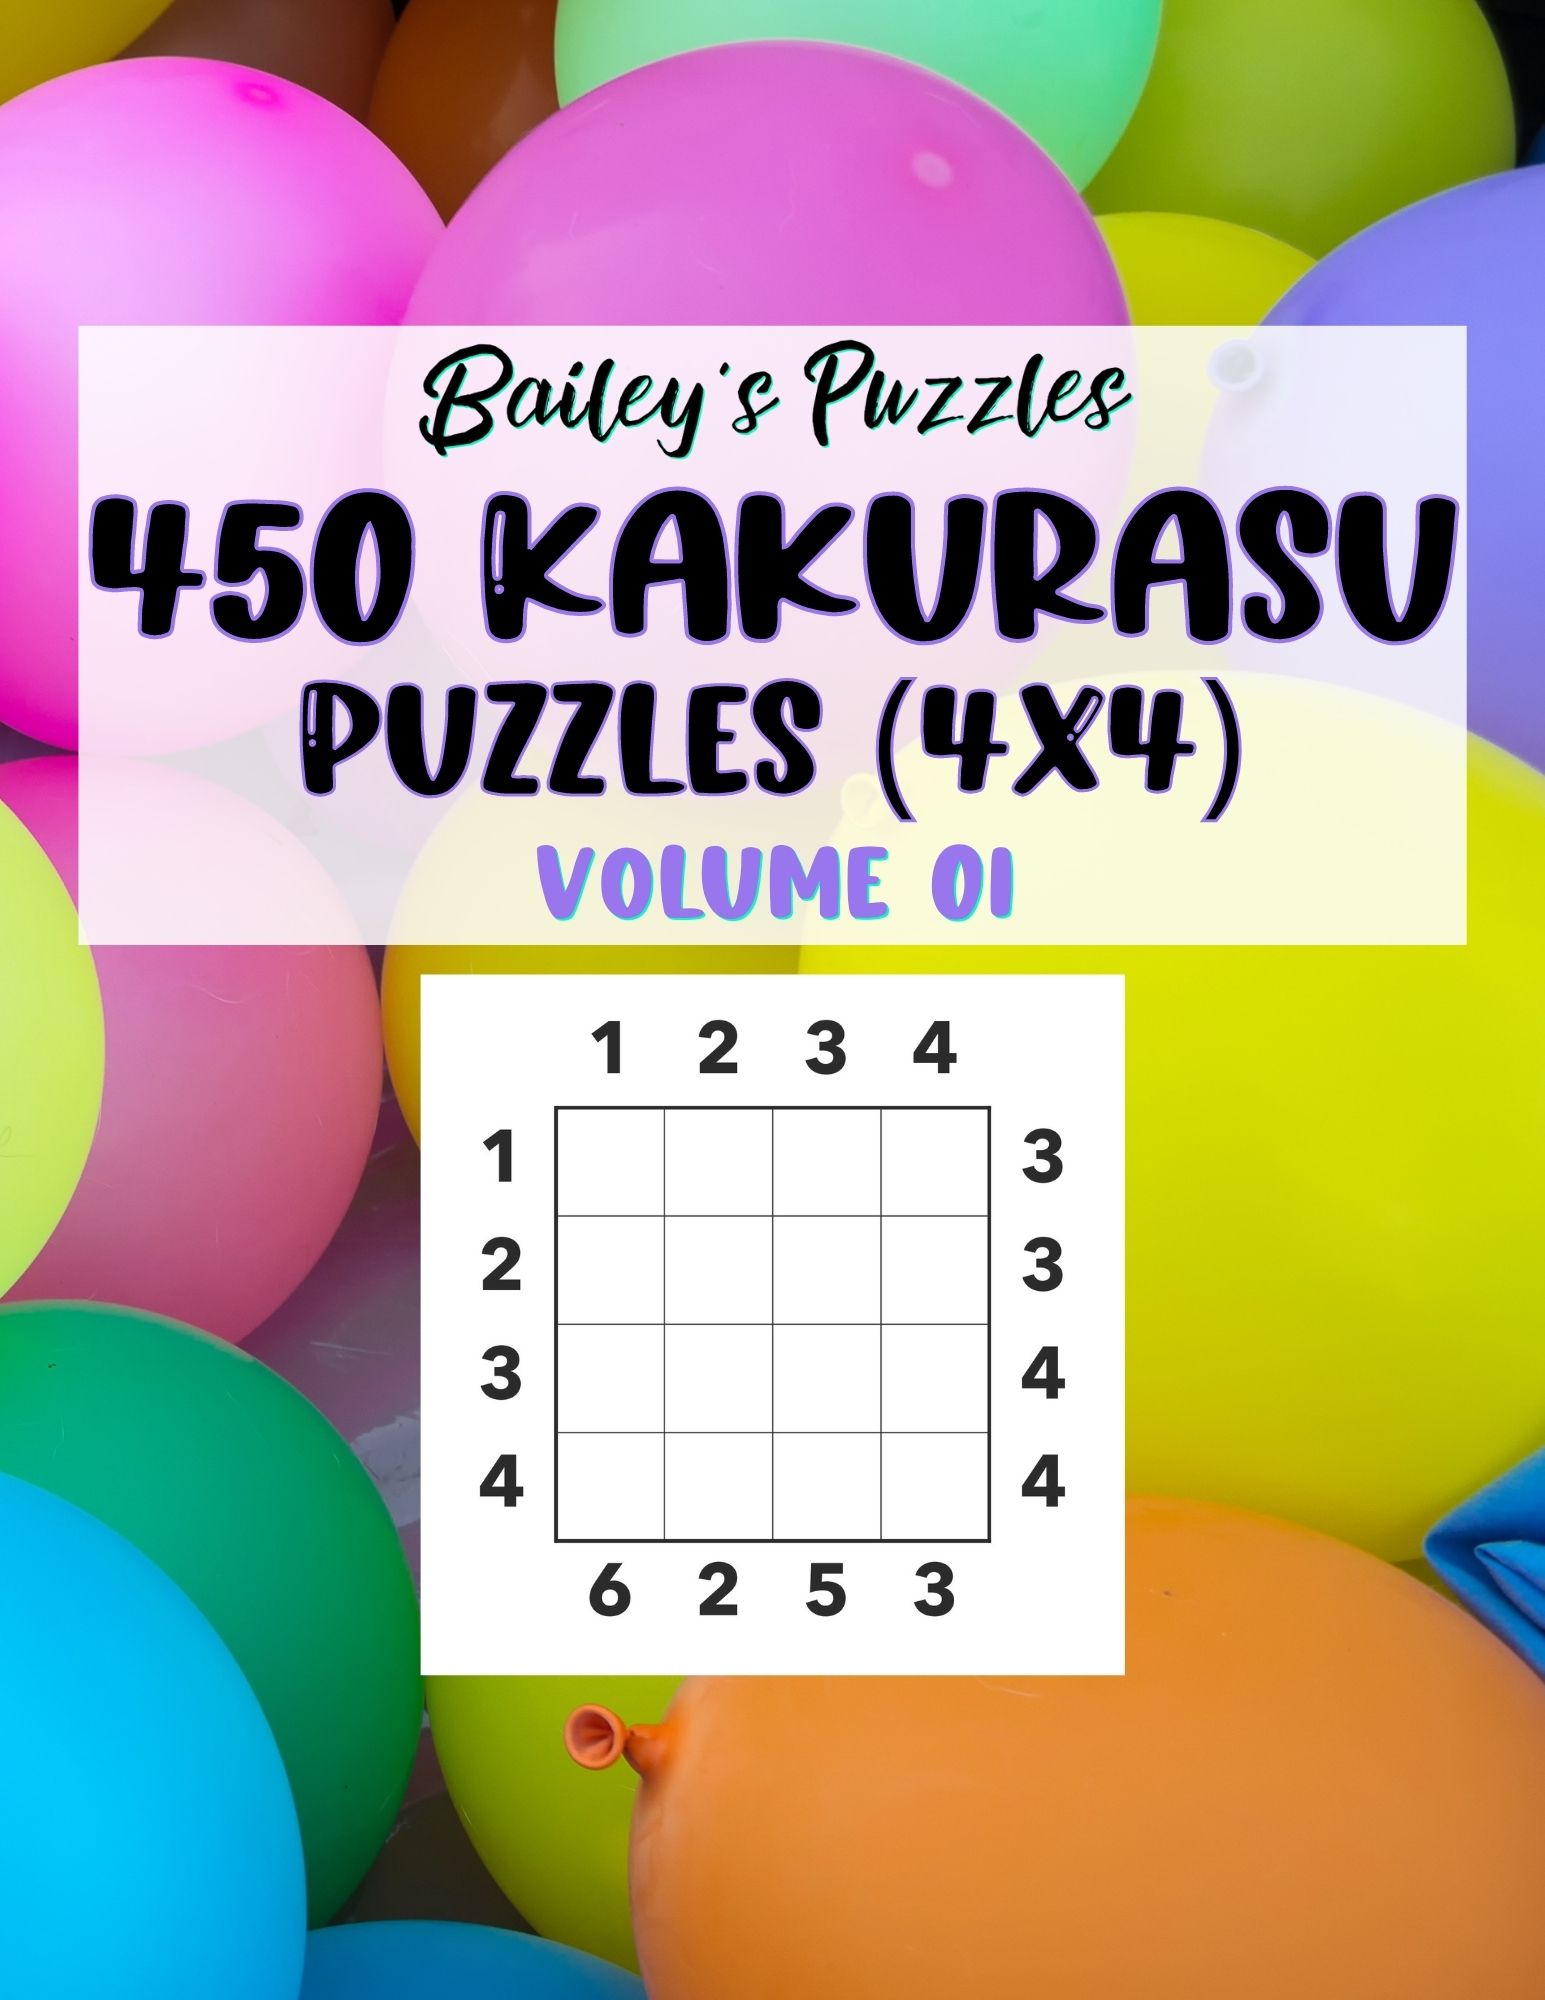 Buy Now: 450 Kakurasu Puzzles 4x4